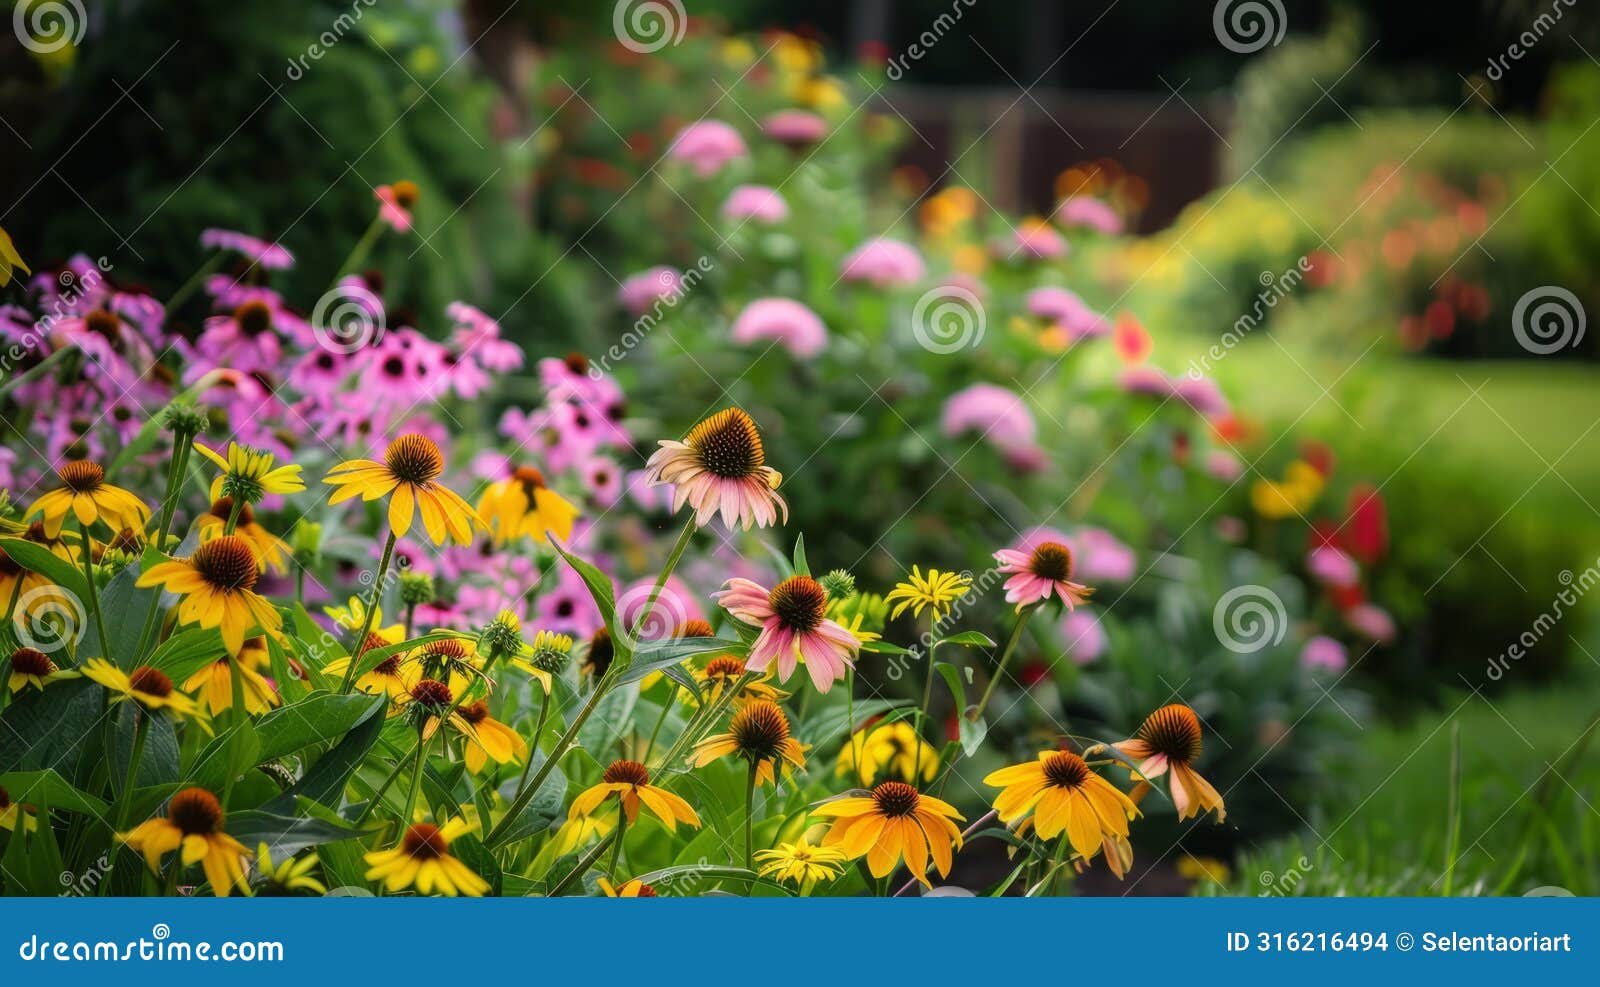 pollinator-friendly annual plantings